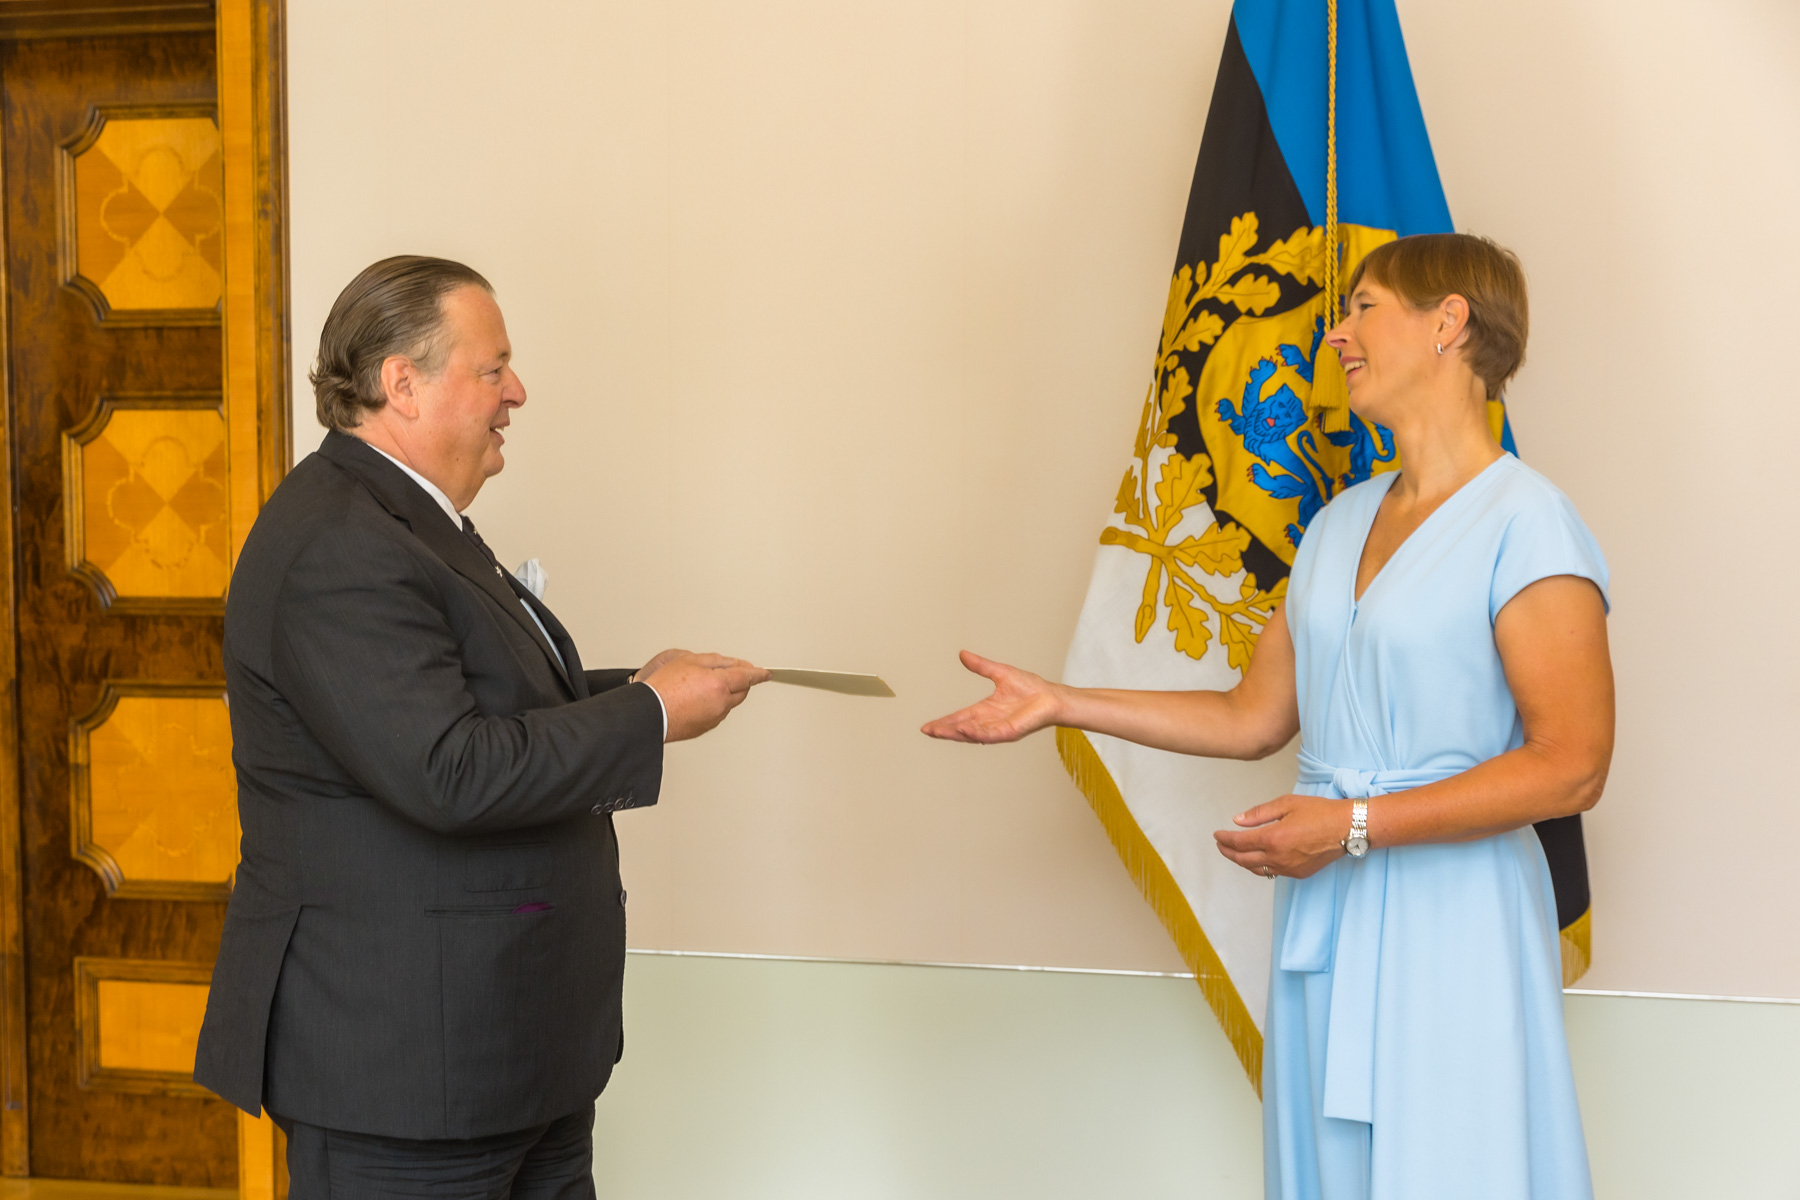 Ambassador J.E. Manfred Ritter Mautner von Markhof presented Credentials to the President of the Republic of Estonia